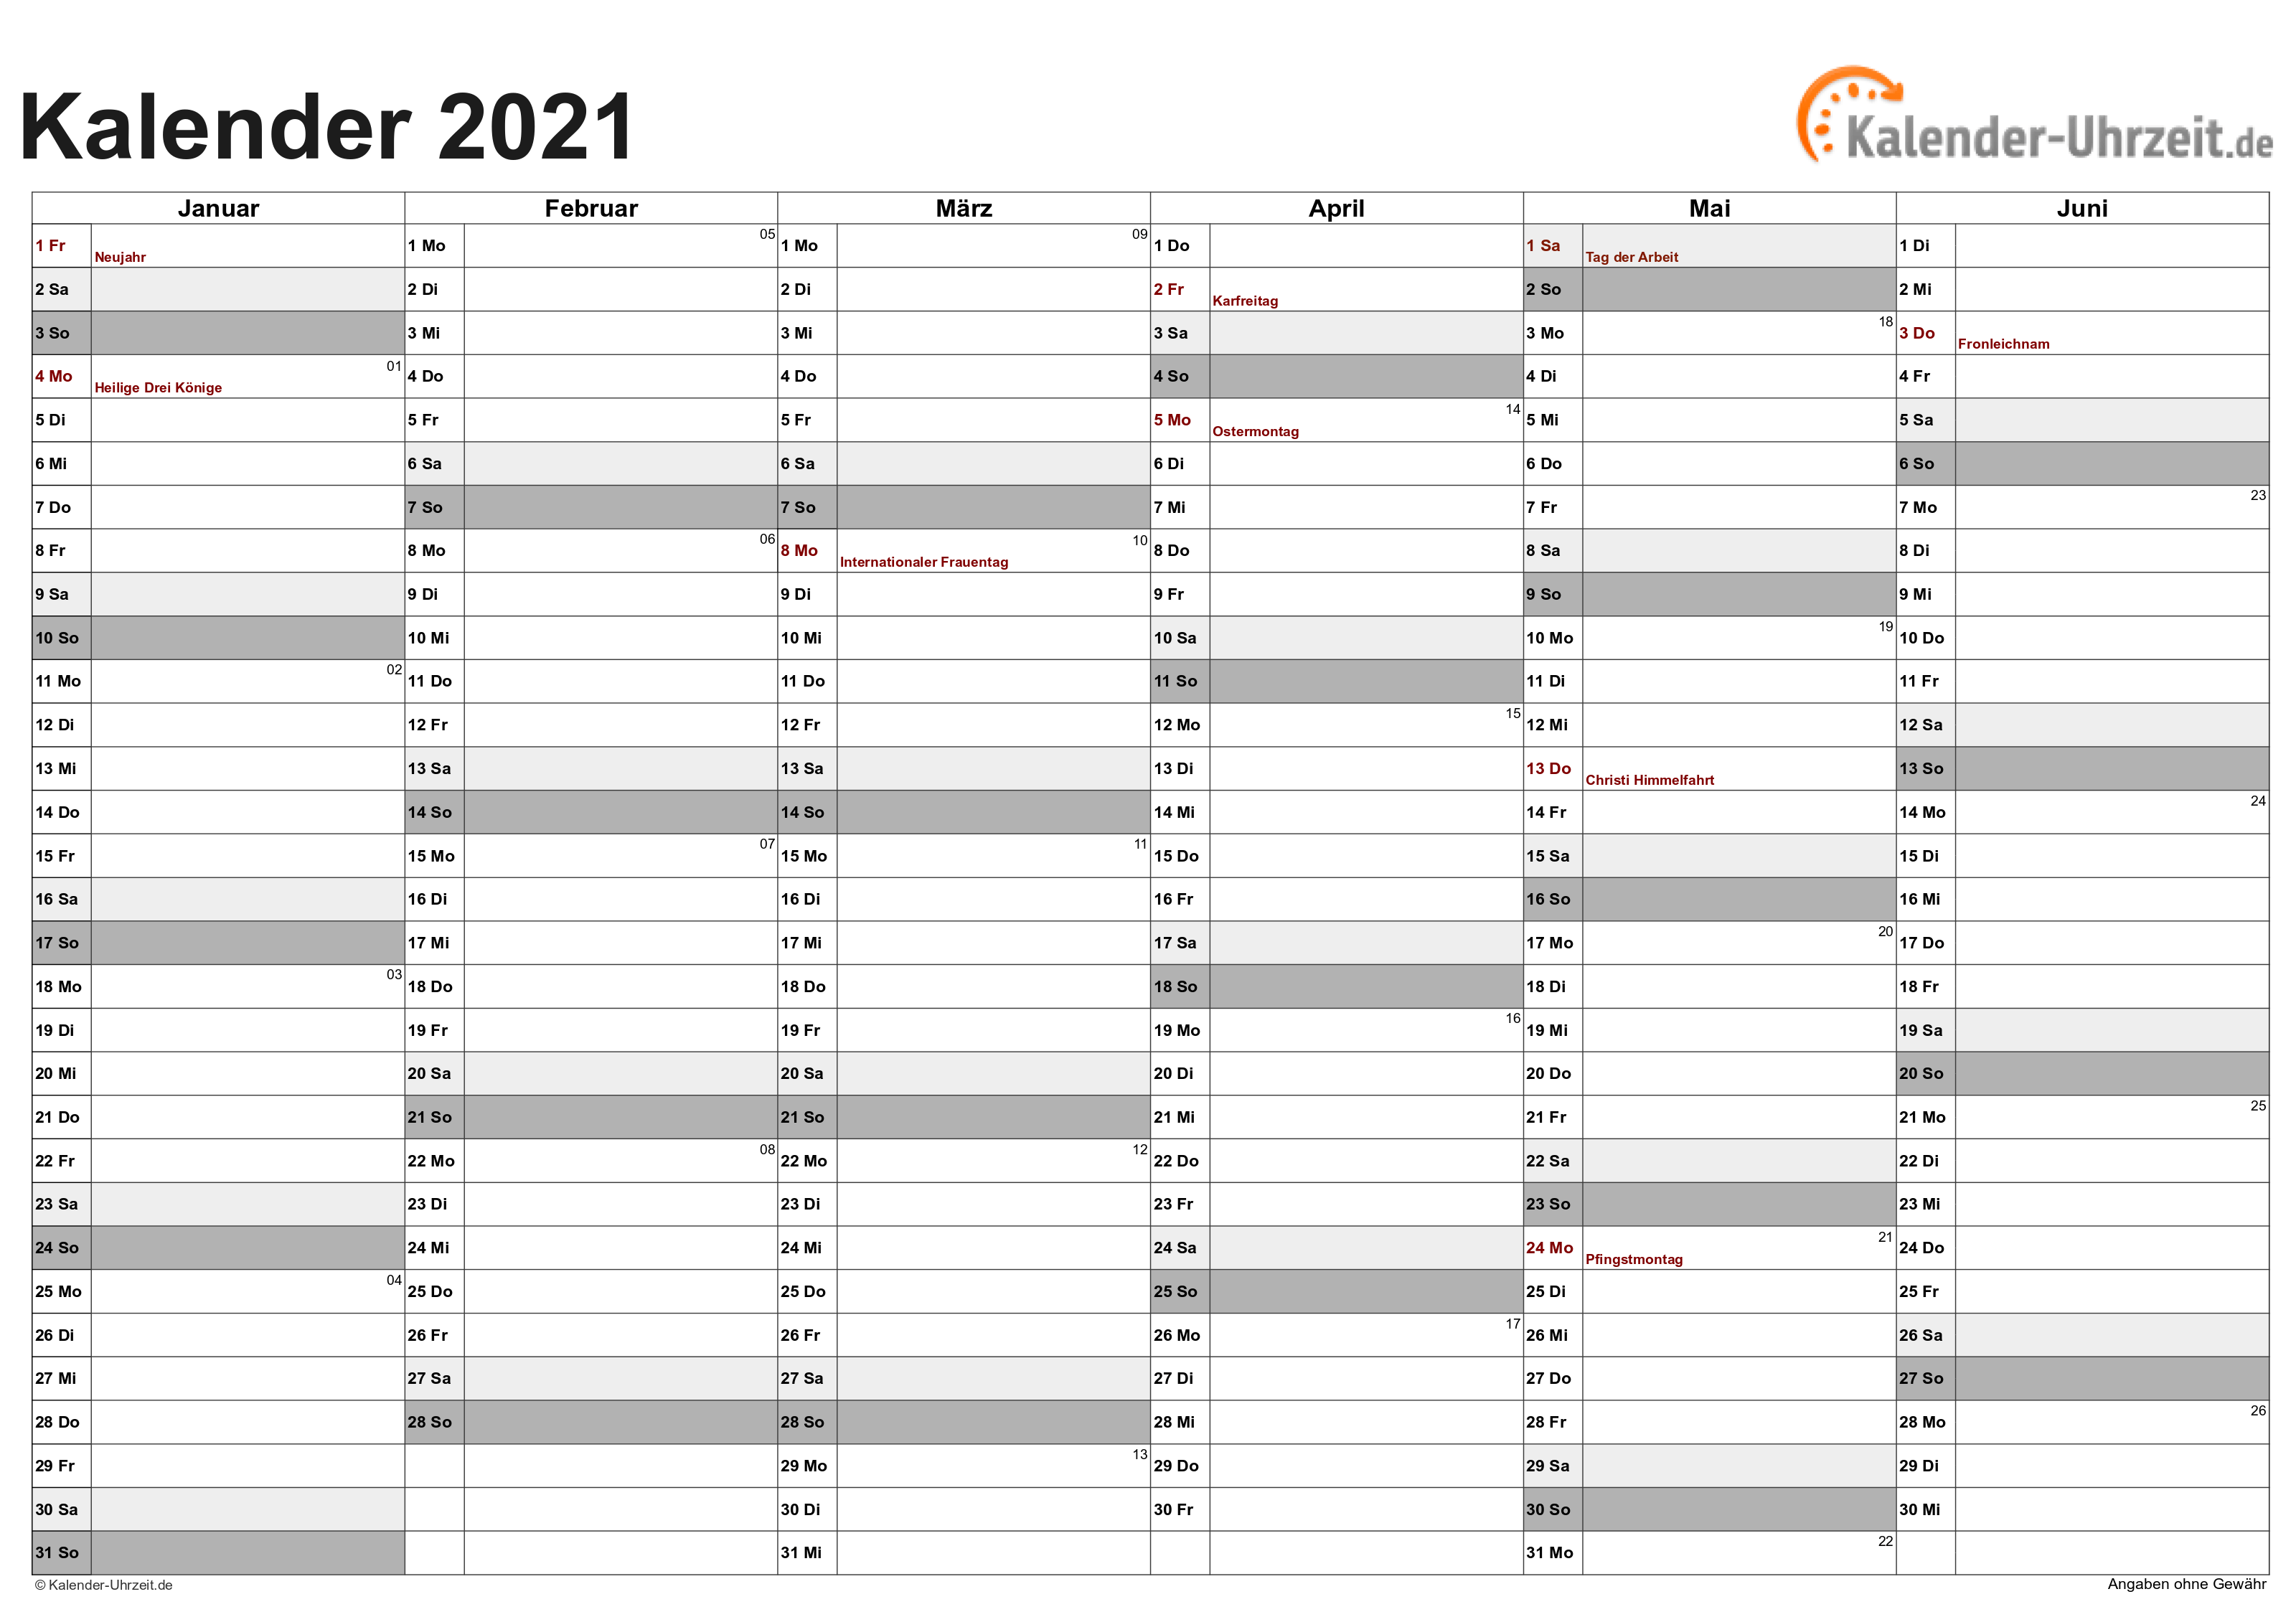 Kalender-Uhrzeit.De 2021